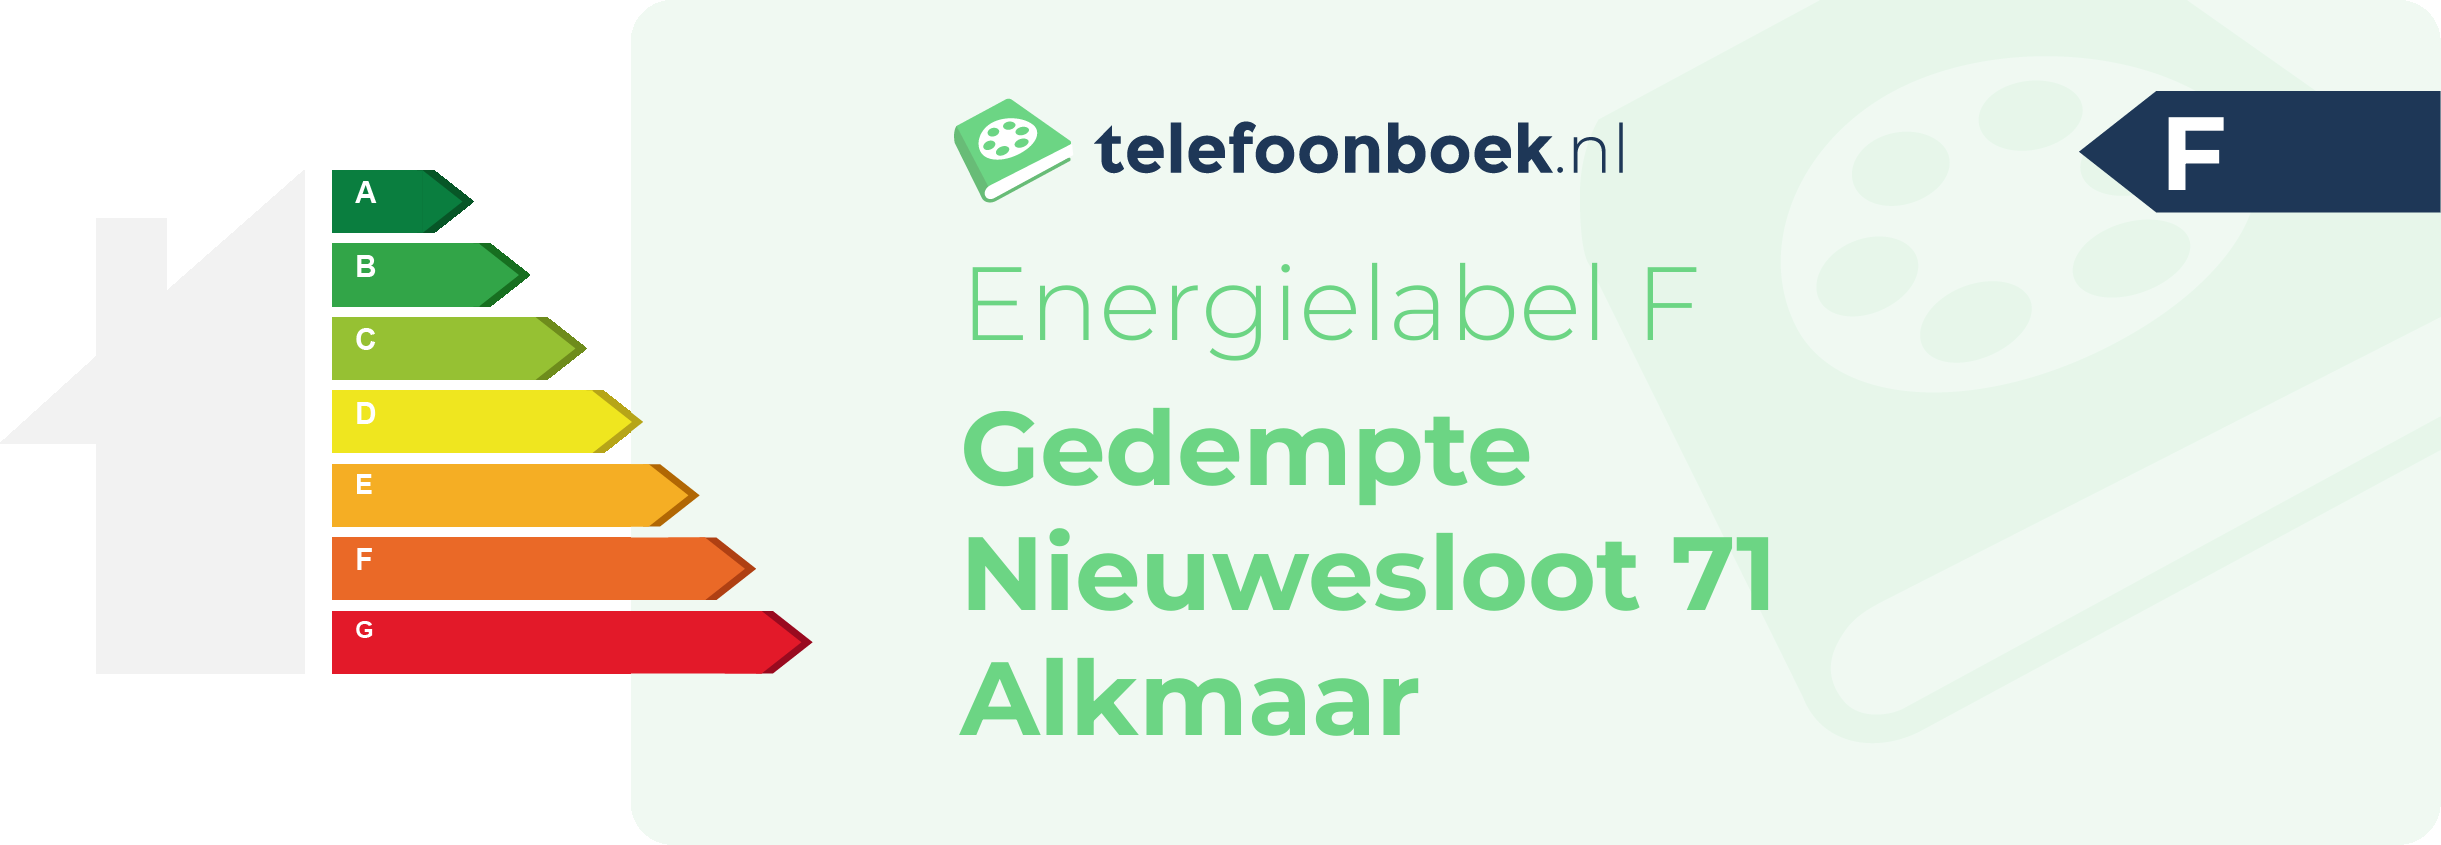 Energielabel Gedempte Nieuwesloot 71 Alkmaar